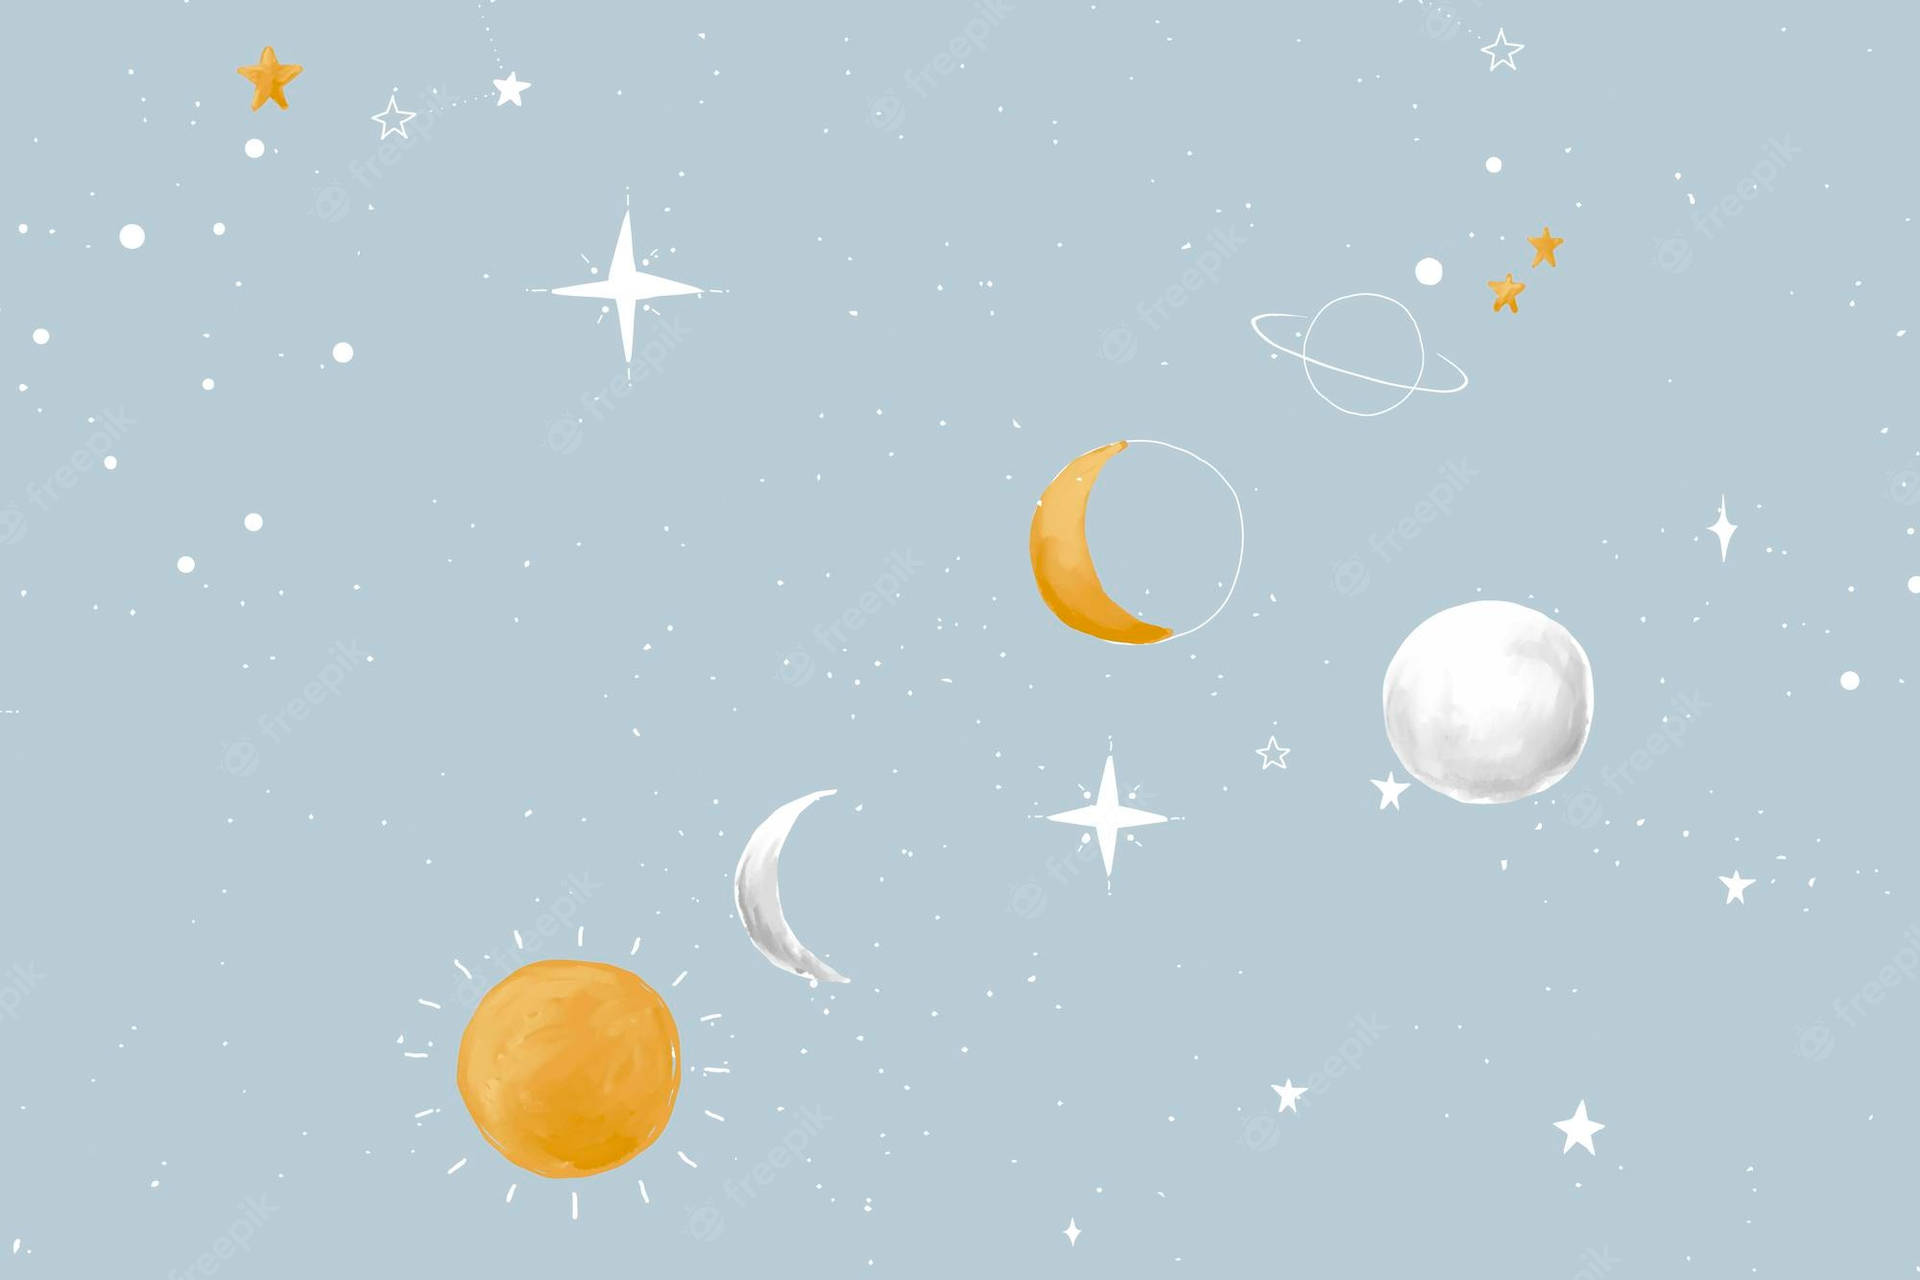 Cute Simple Moon And Star Aesthetic Desktop Wallpaper